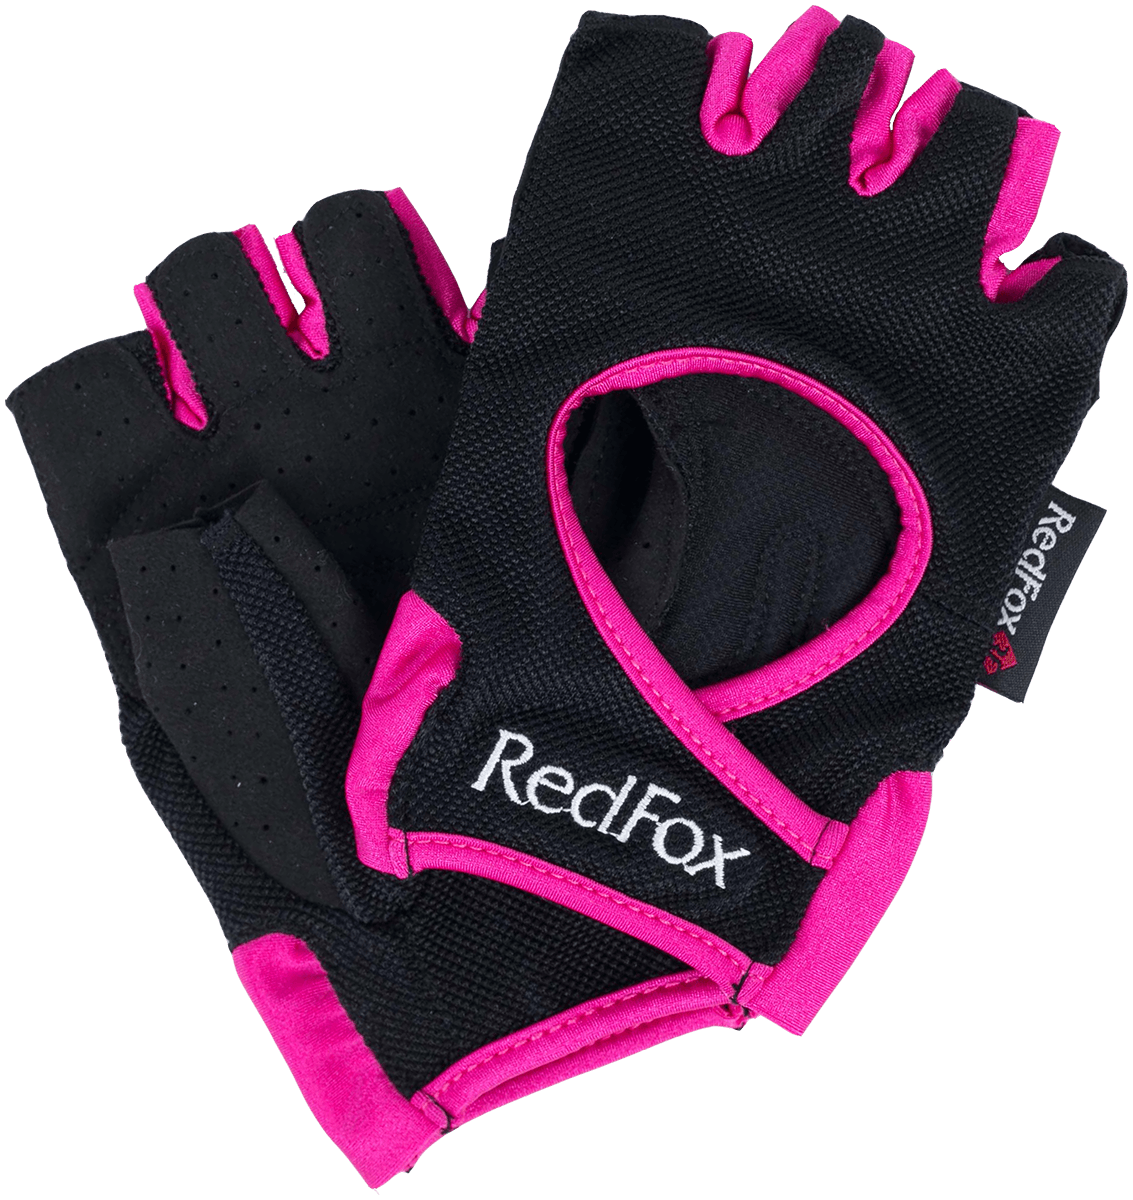 Перчатки Winner Red Fox, цвет розовый, размер L - фото 1